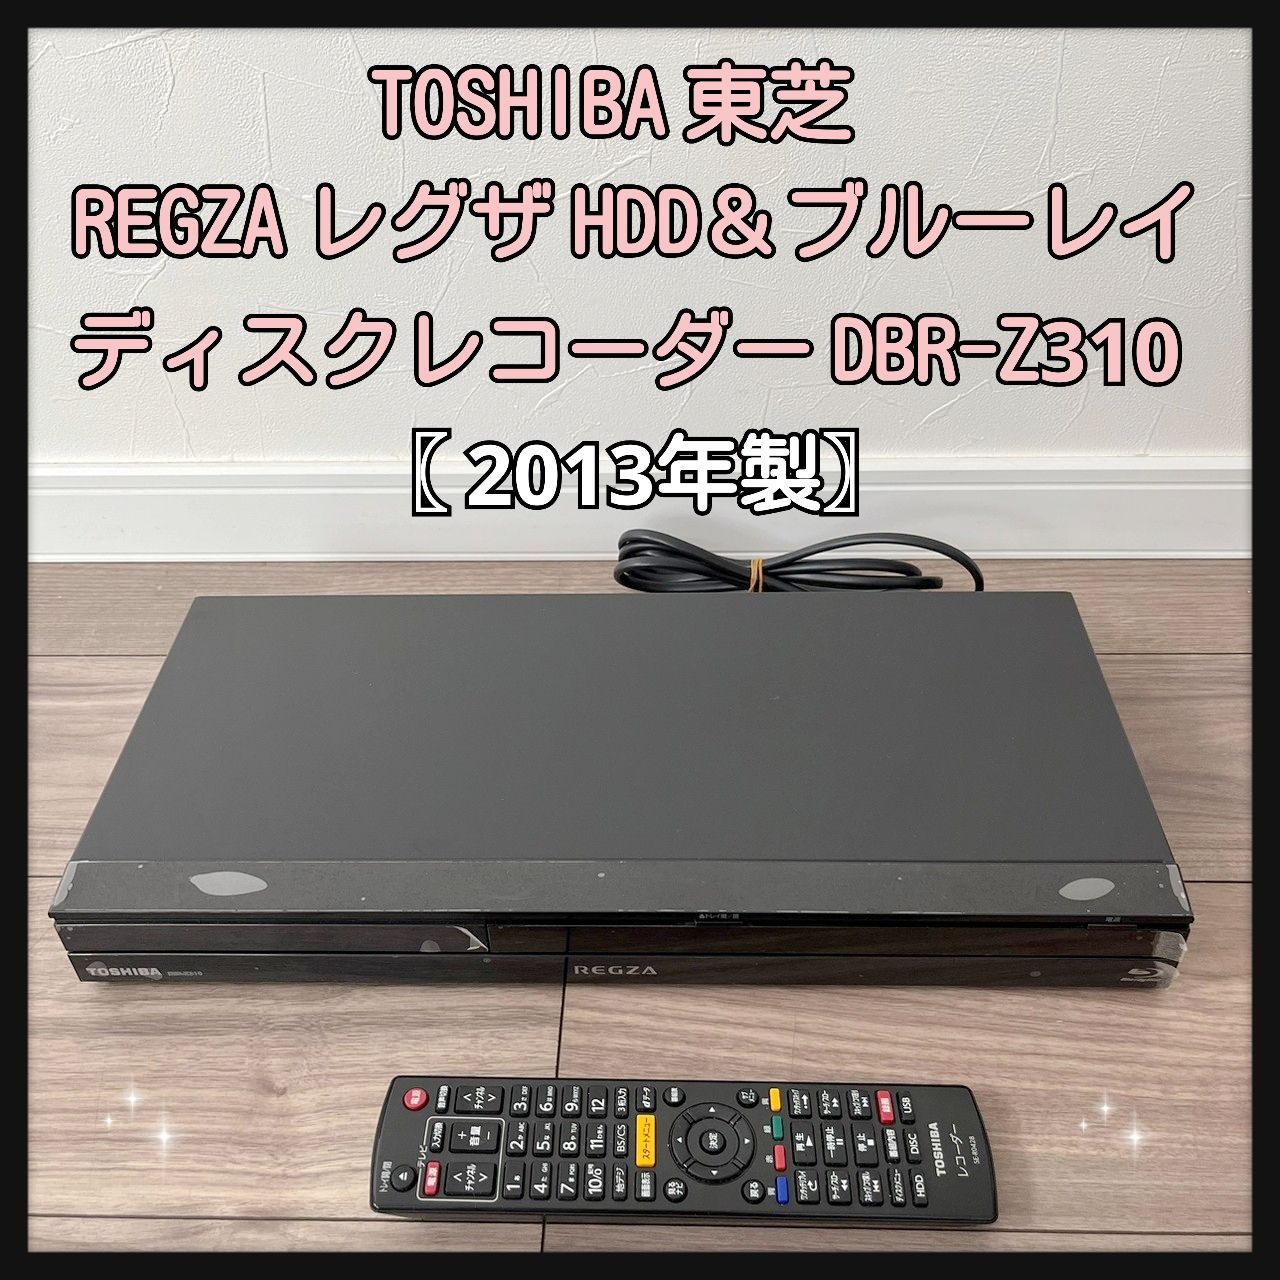 TOSHIBA REGZA レグザブルーレイ DBR-Z310 - ブルーレイレコーダー